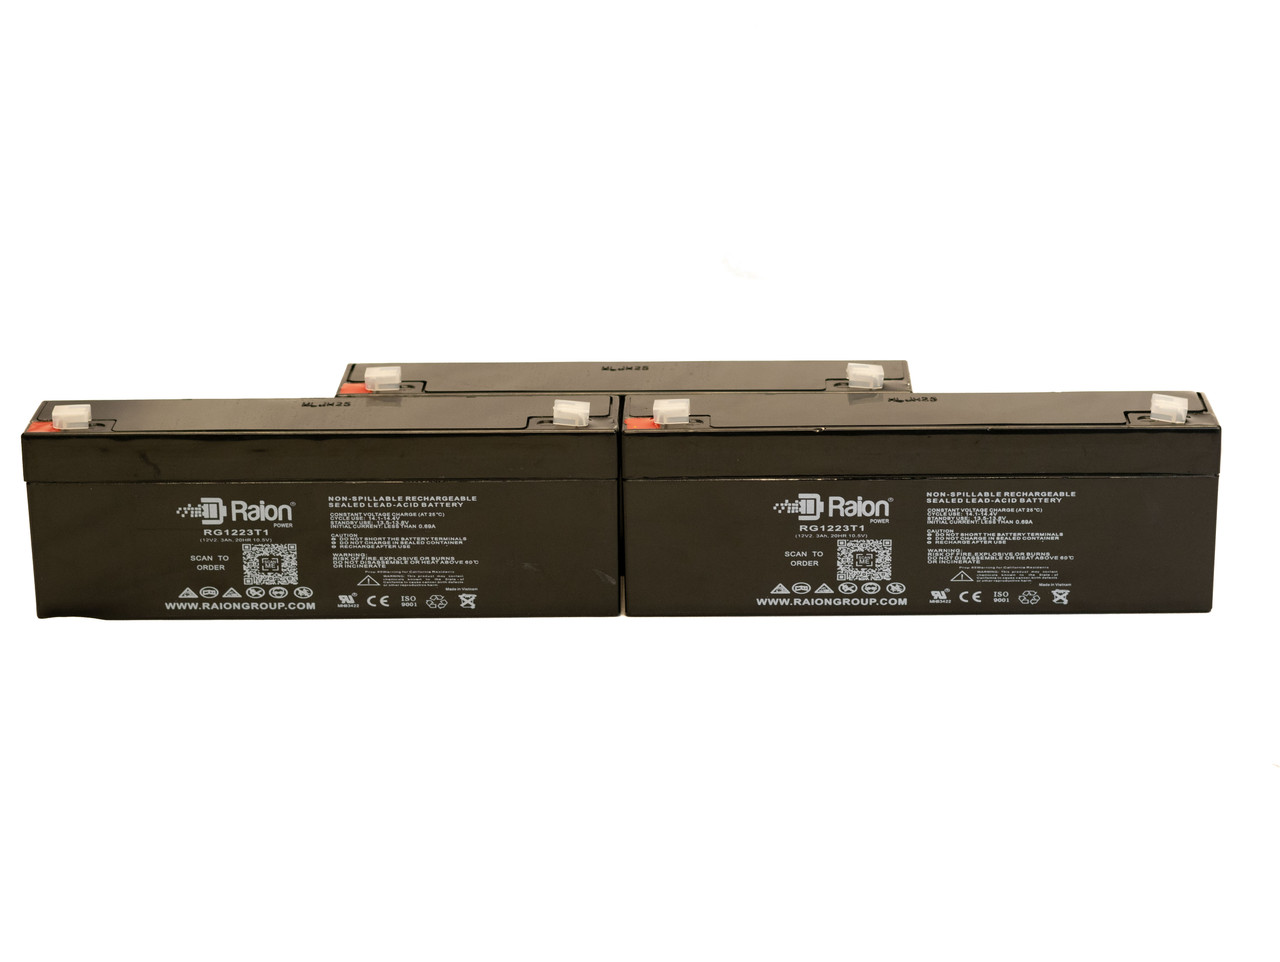 Raion Power 12V 2.3Ah RG1223T1 Replacement Medical Battery for Dynatech Impulse 4000 Defibrillator Tester - 3 Pack